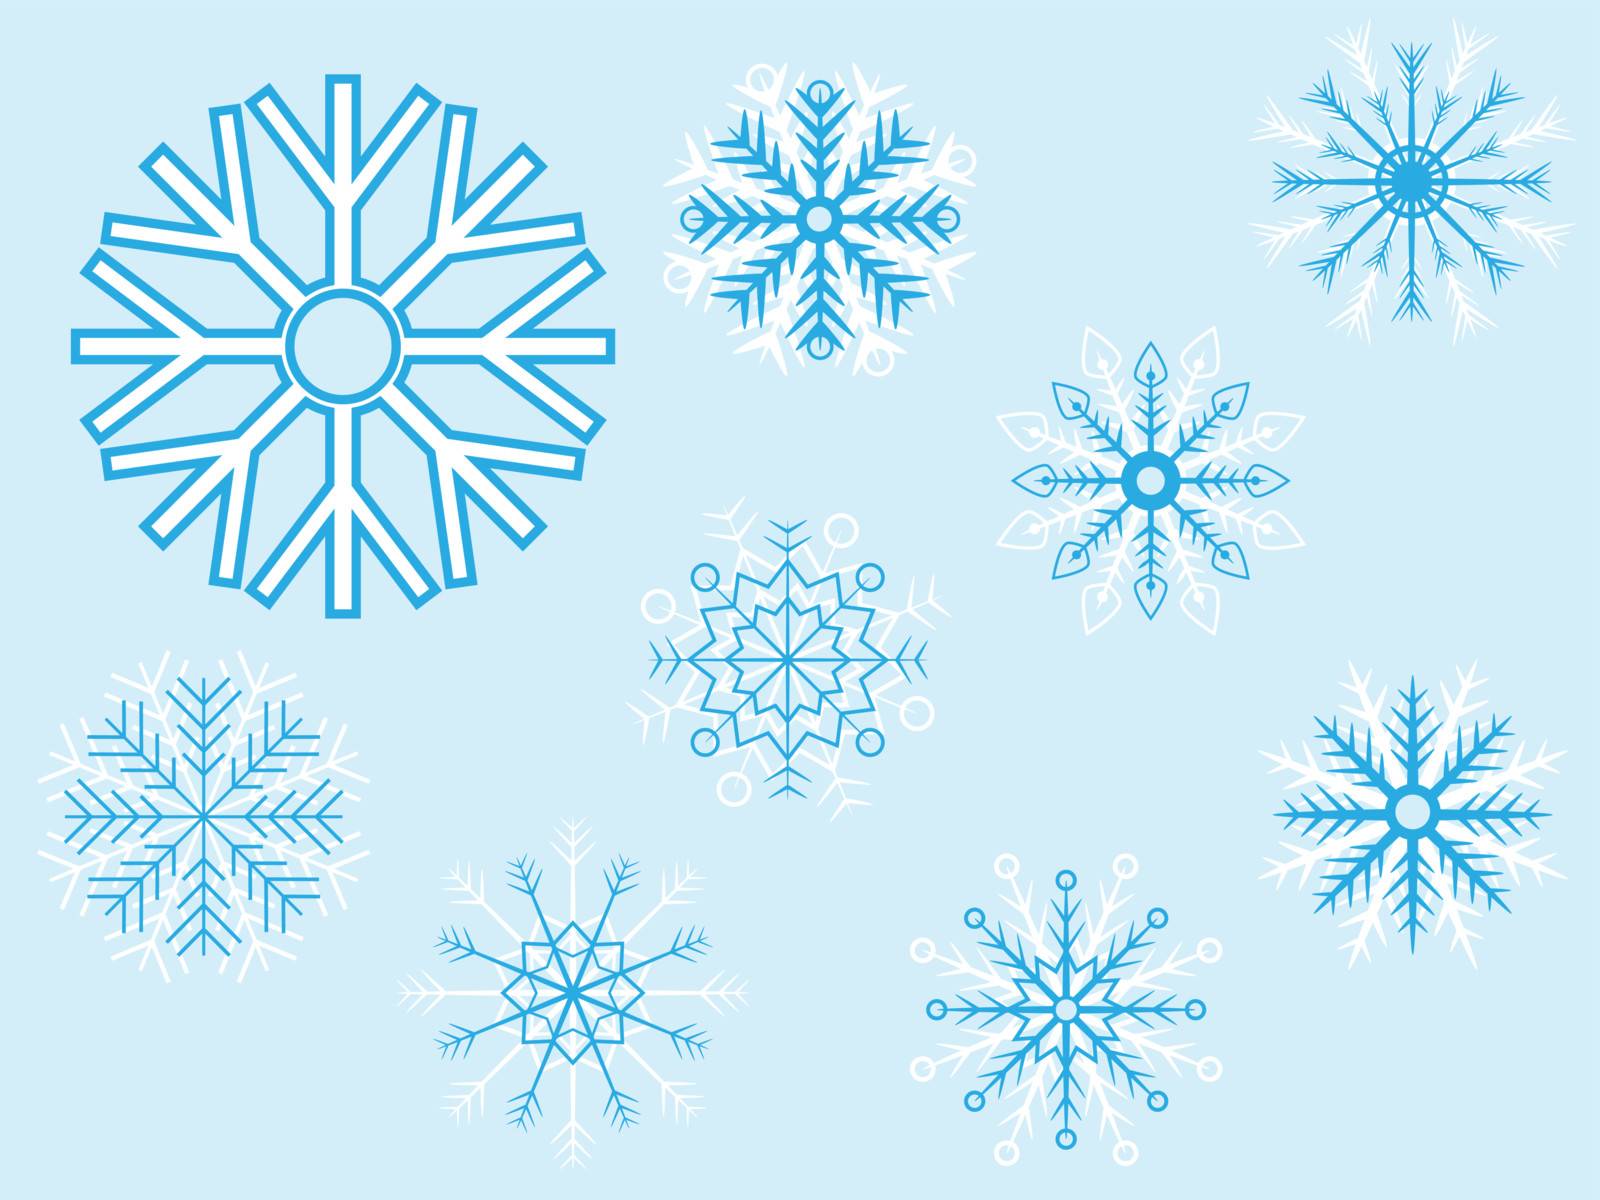 Snowflake set by 578foot